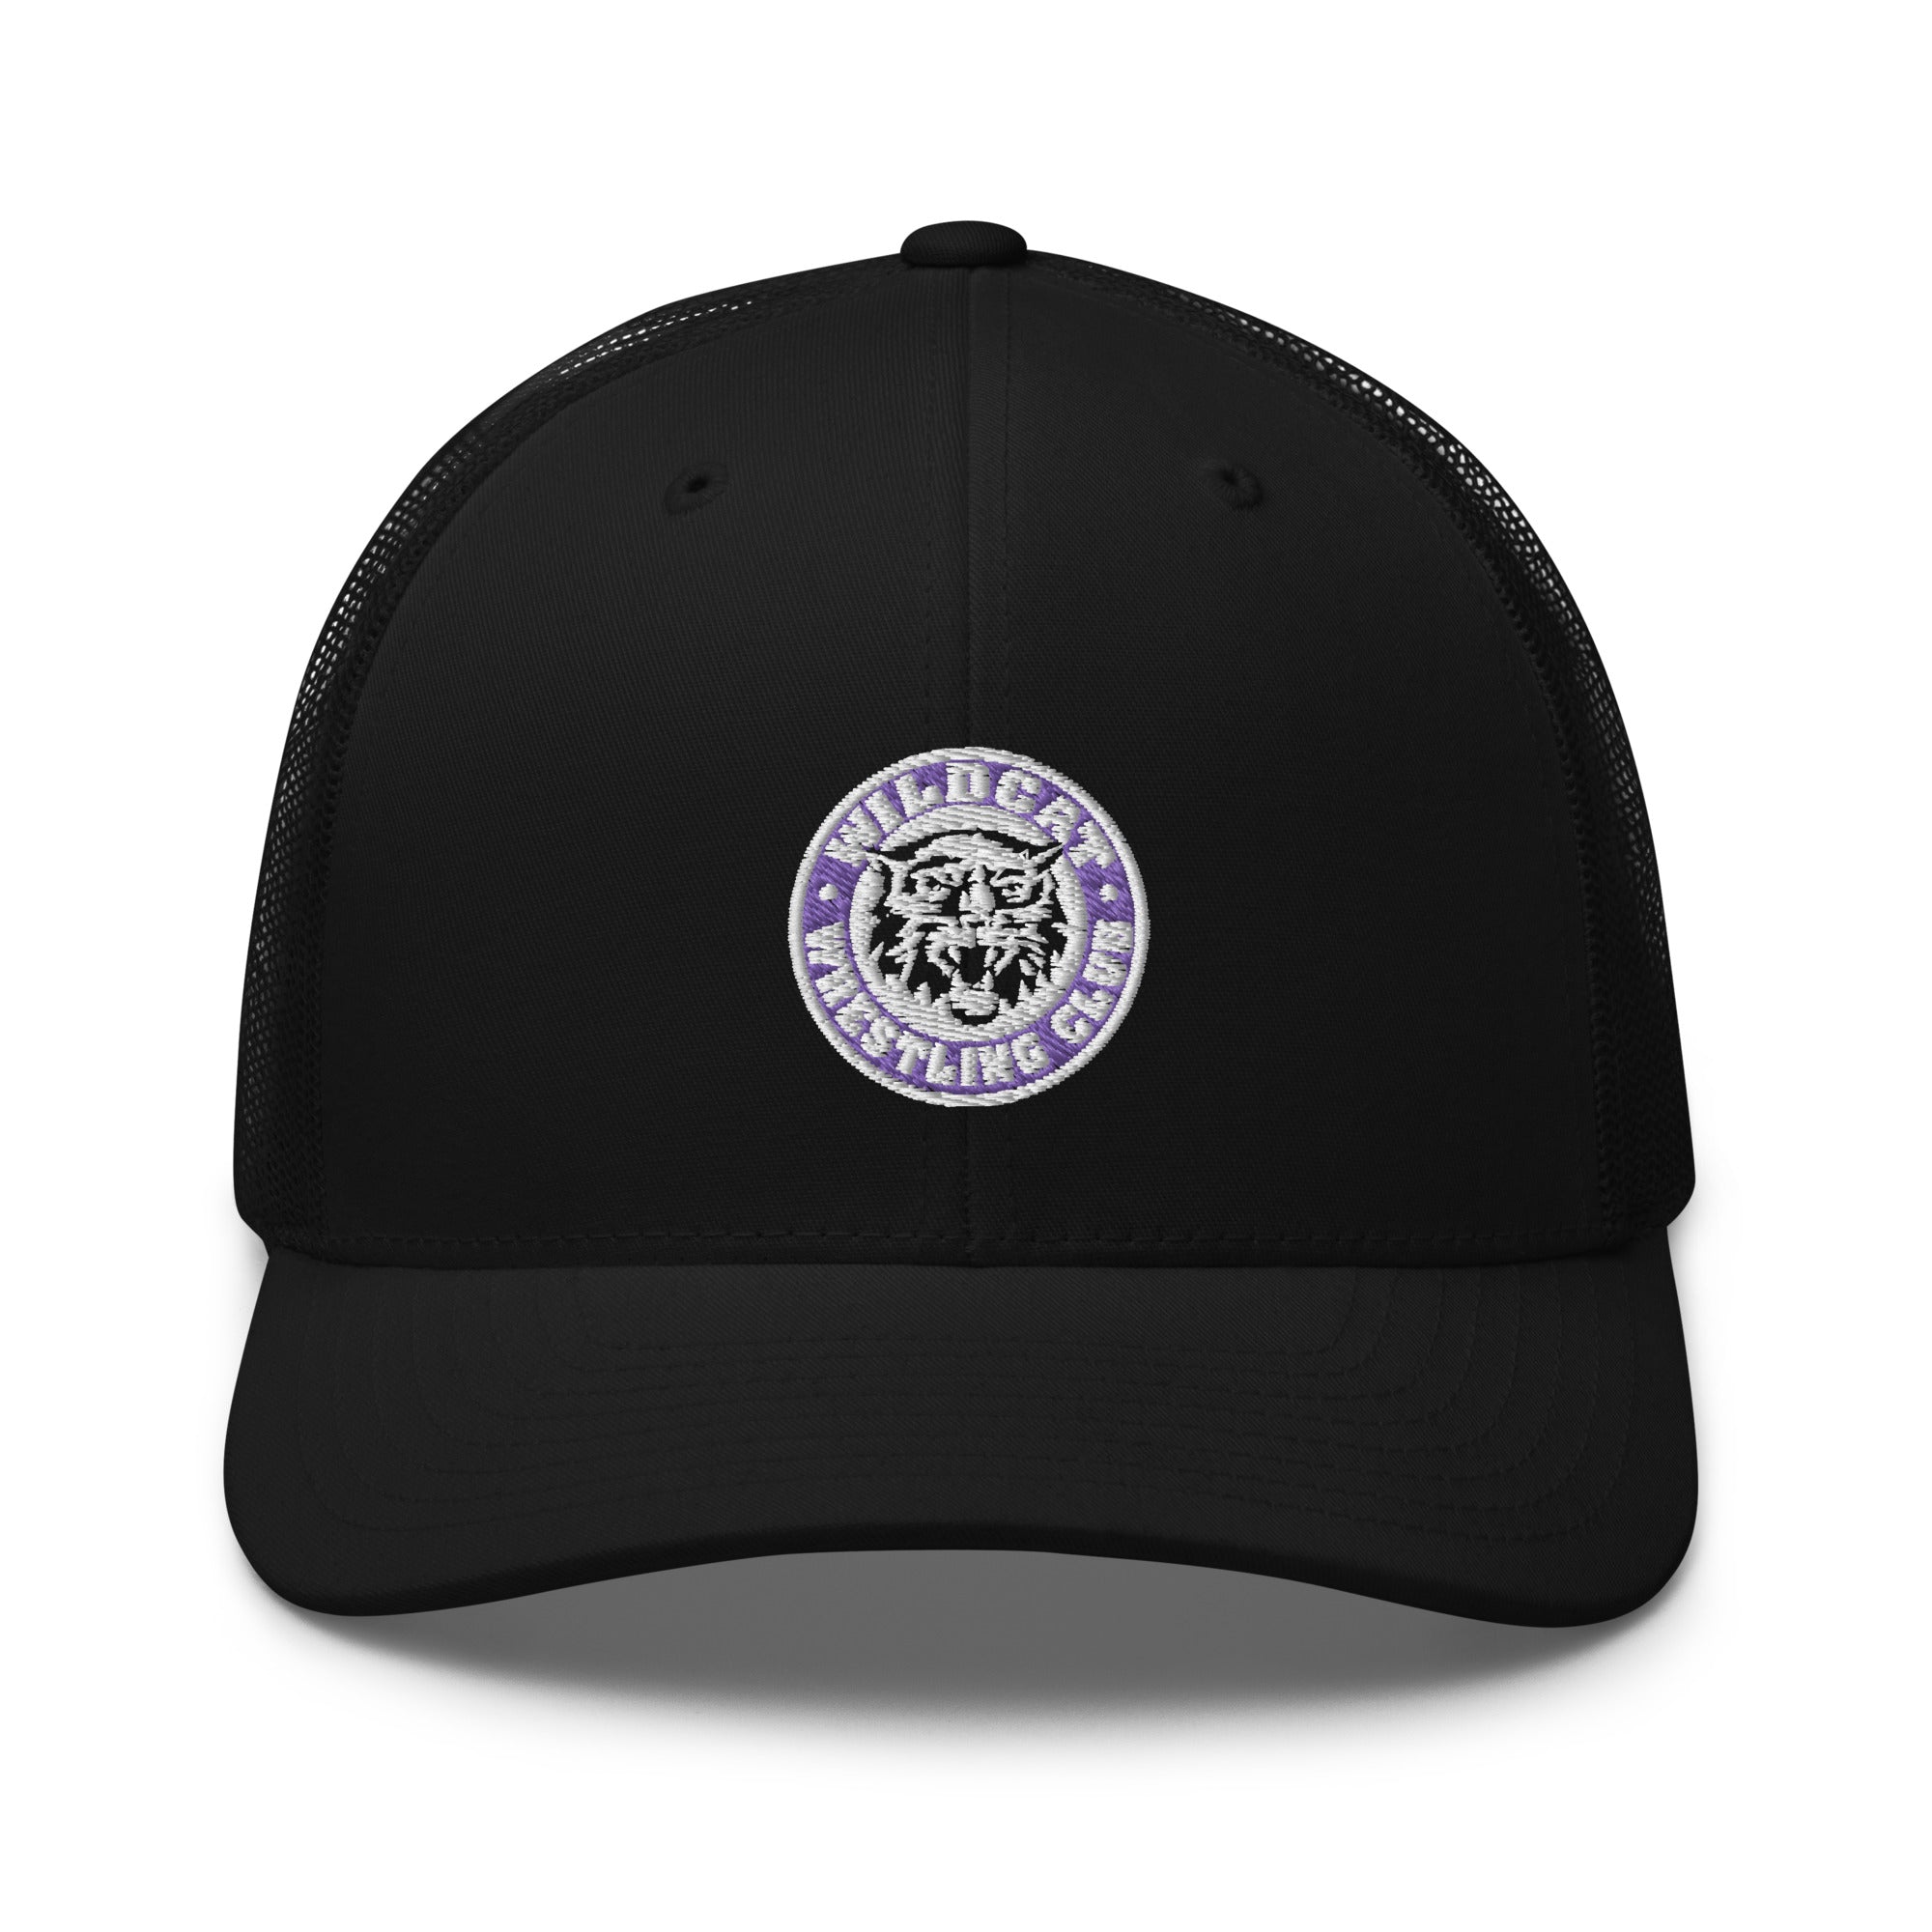 Wildcat Wrestling Club (Louisburg) Retro Trucker Hat